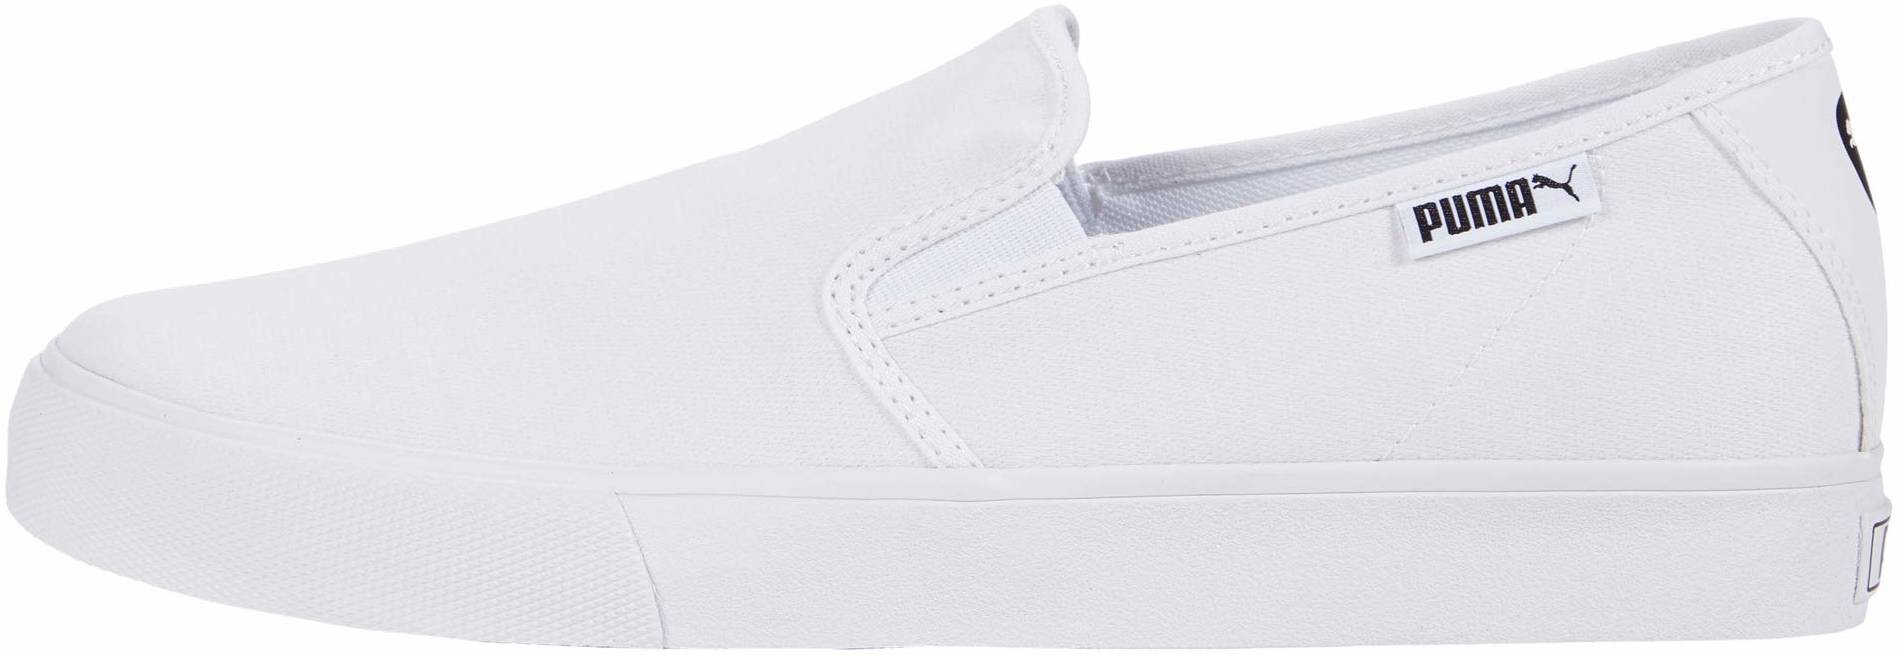 Puma Bari Slip-On sneakers in white (only $30) | RunRepeat